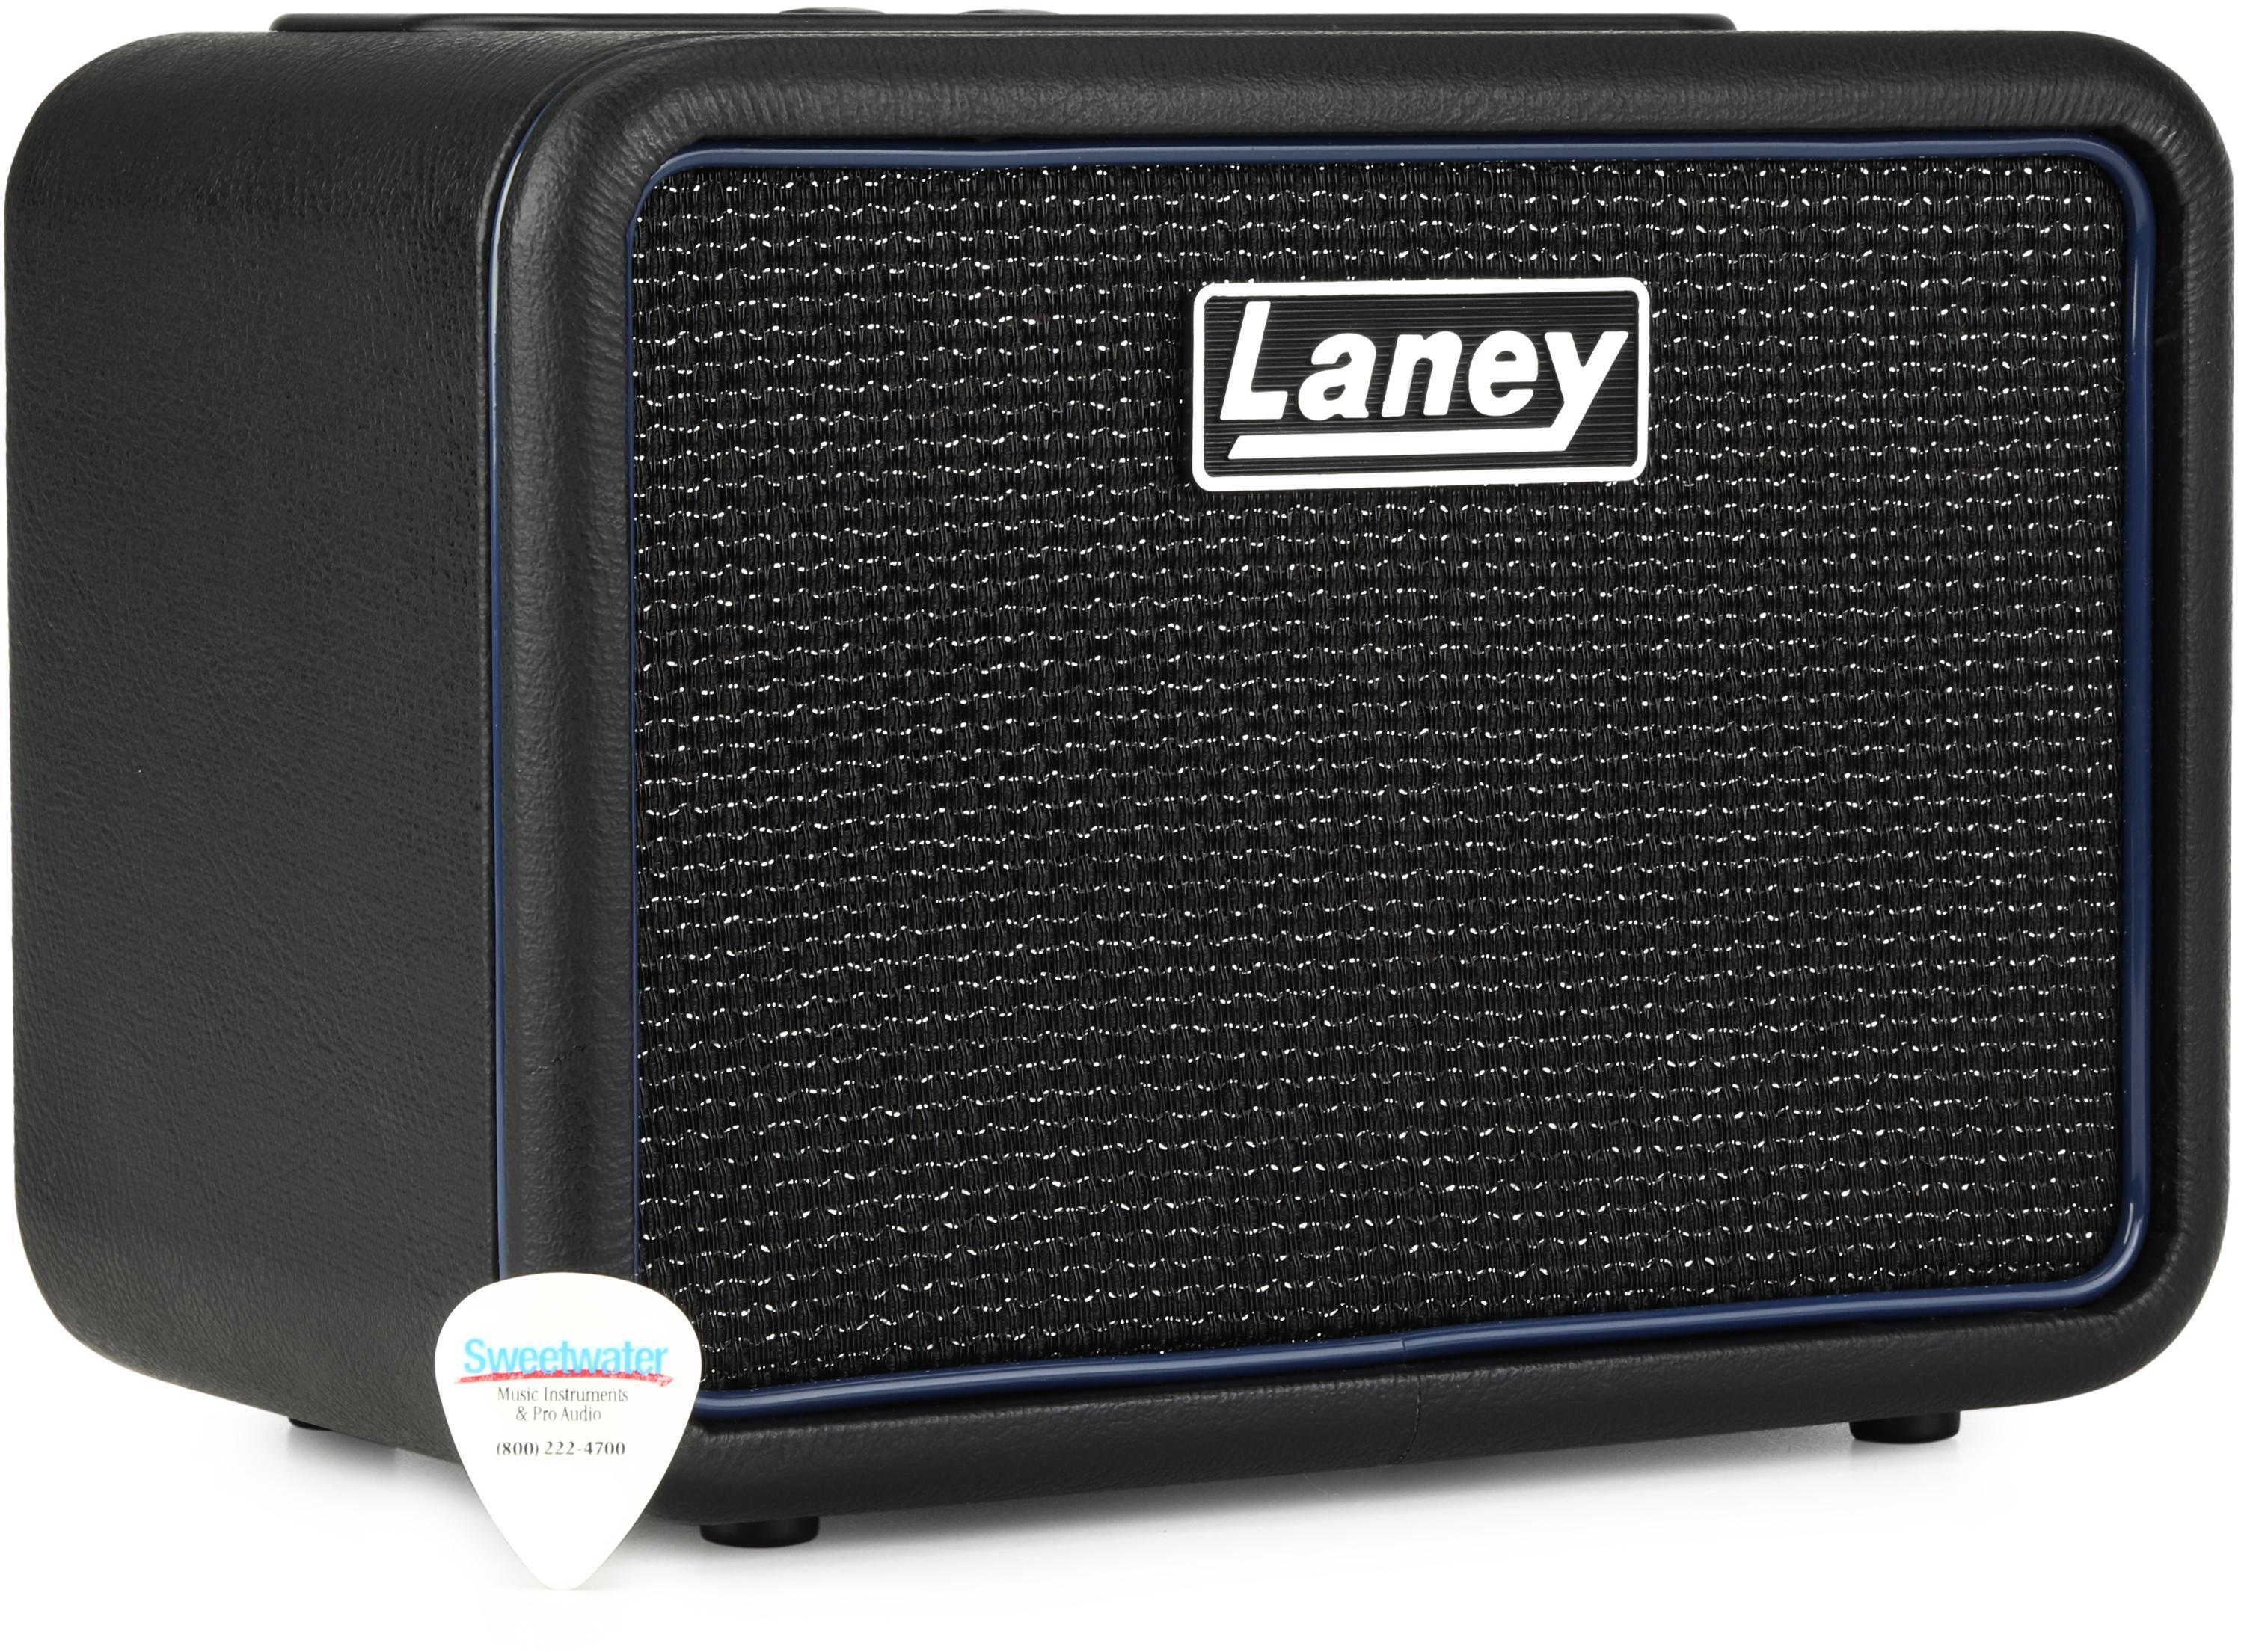 Laney Mini-Bass-NX Battery-powered Bass Amp | Sweetwater